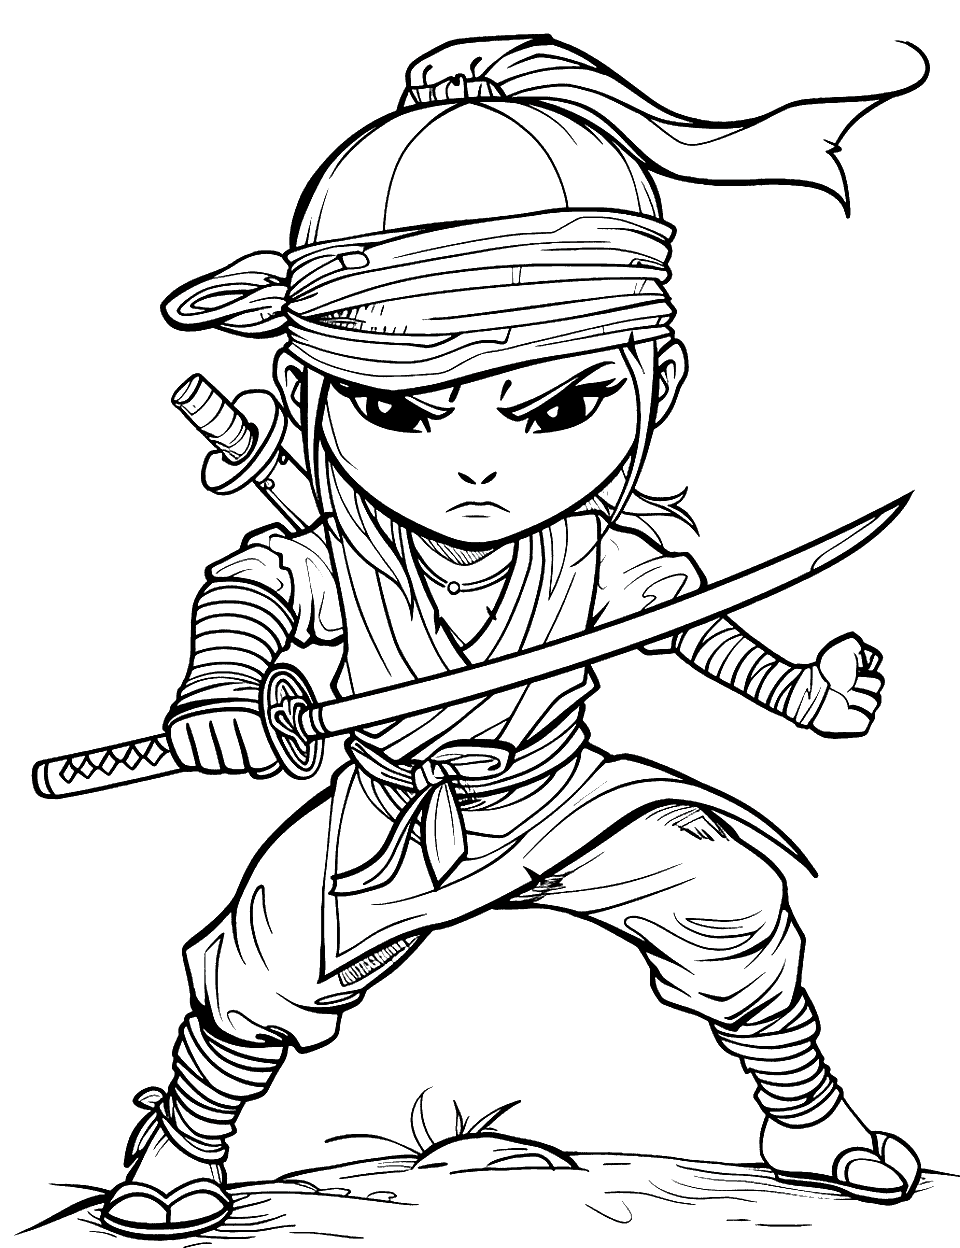 Girl Ninja Coloring Page - A girl ninja in a defensive posture.